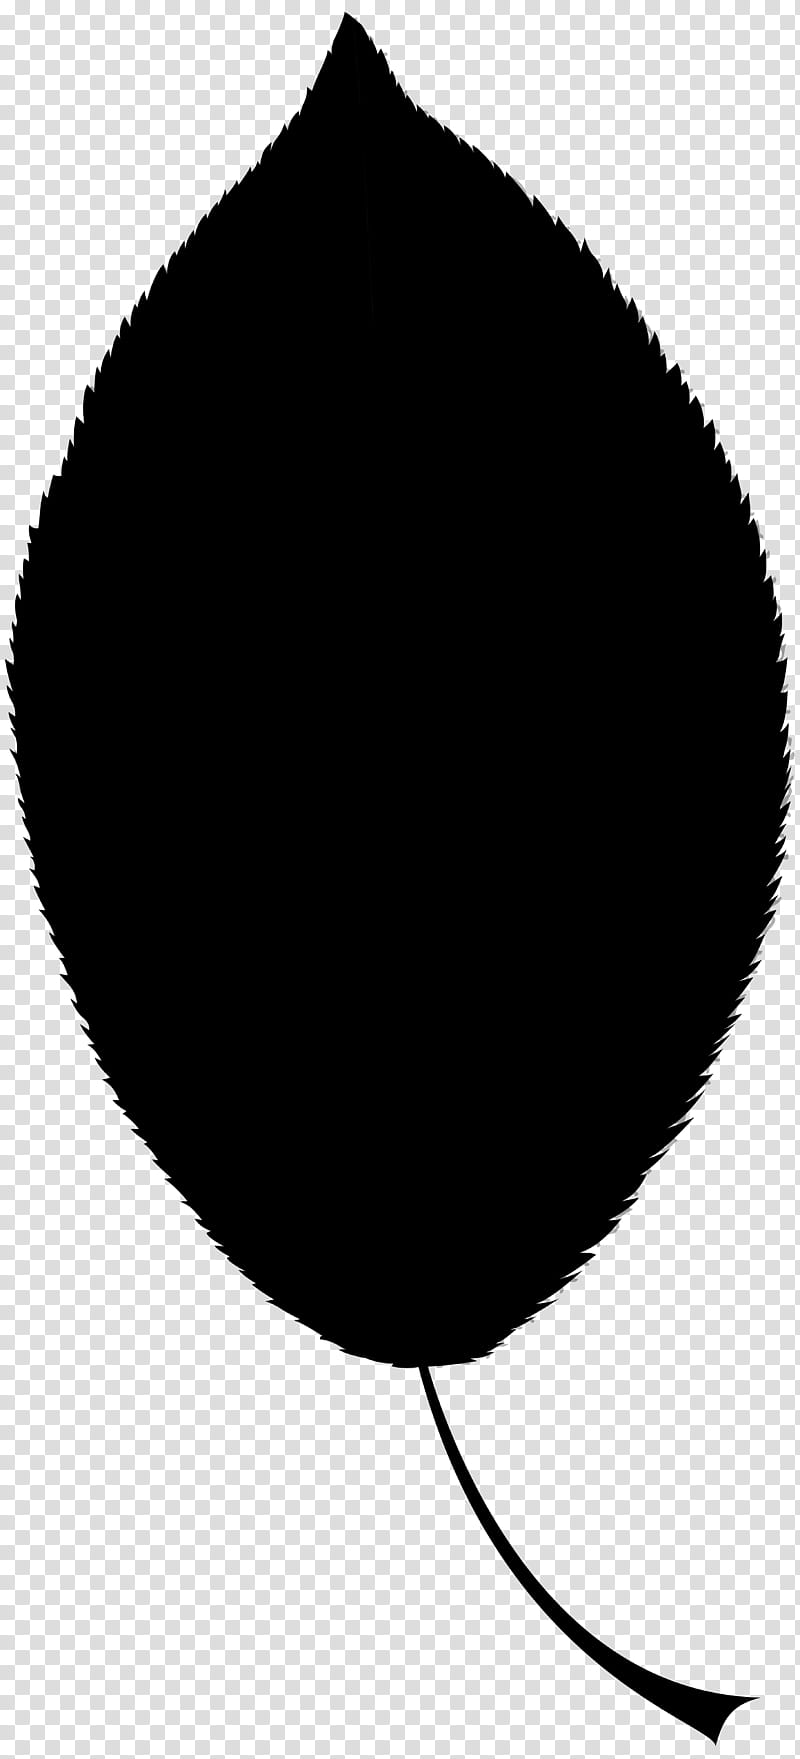 Hot Air Balloon Silhouette, Vintage Hot Air Balloon, Drawing, Black, Leaf, Circle, Blackandwhite transparent background PNG clipart